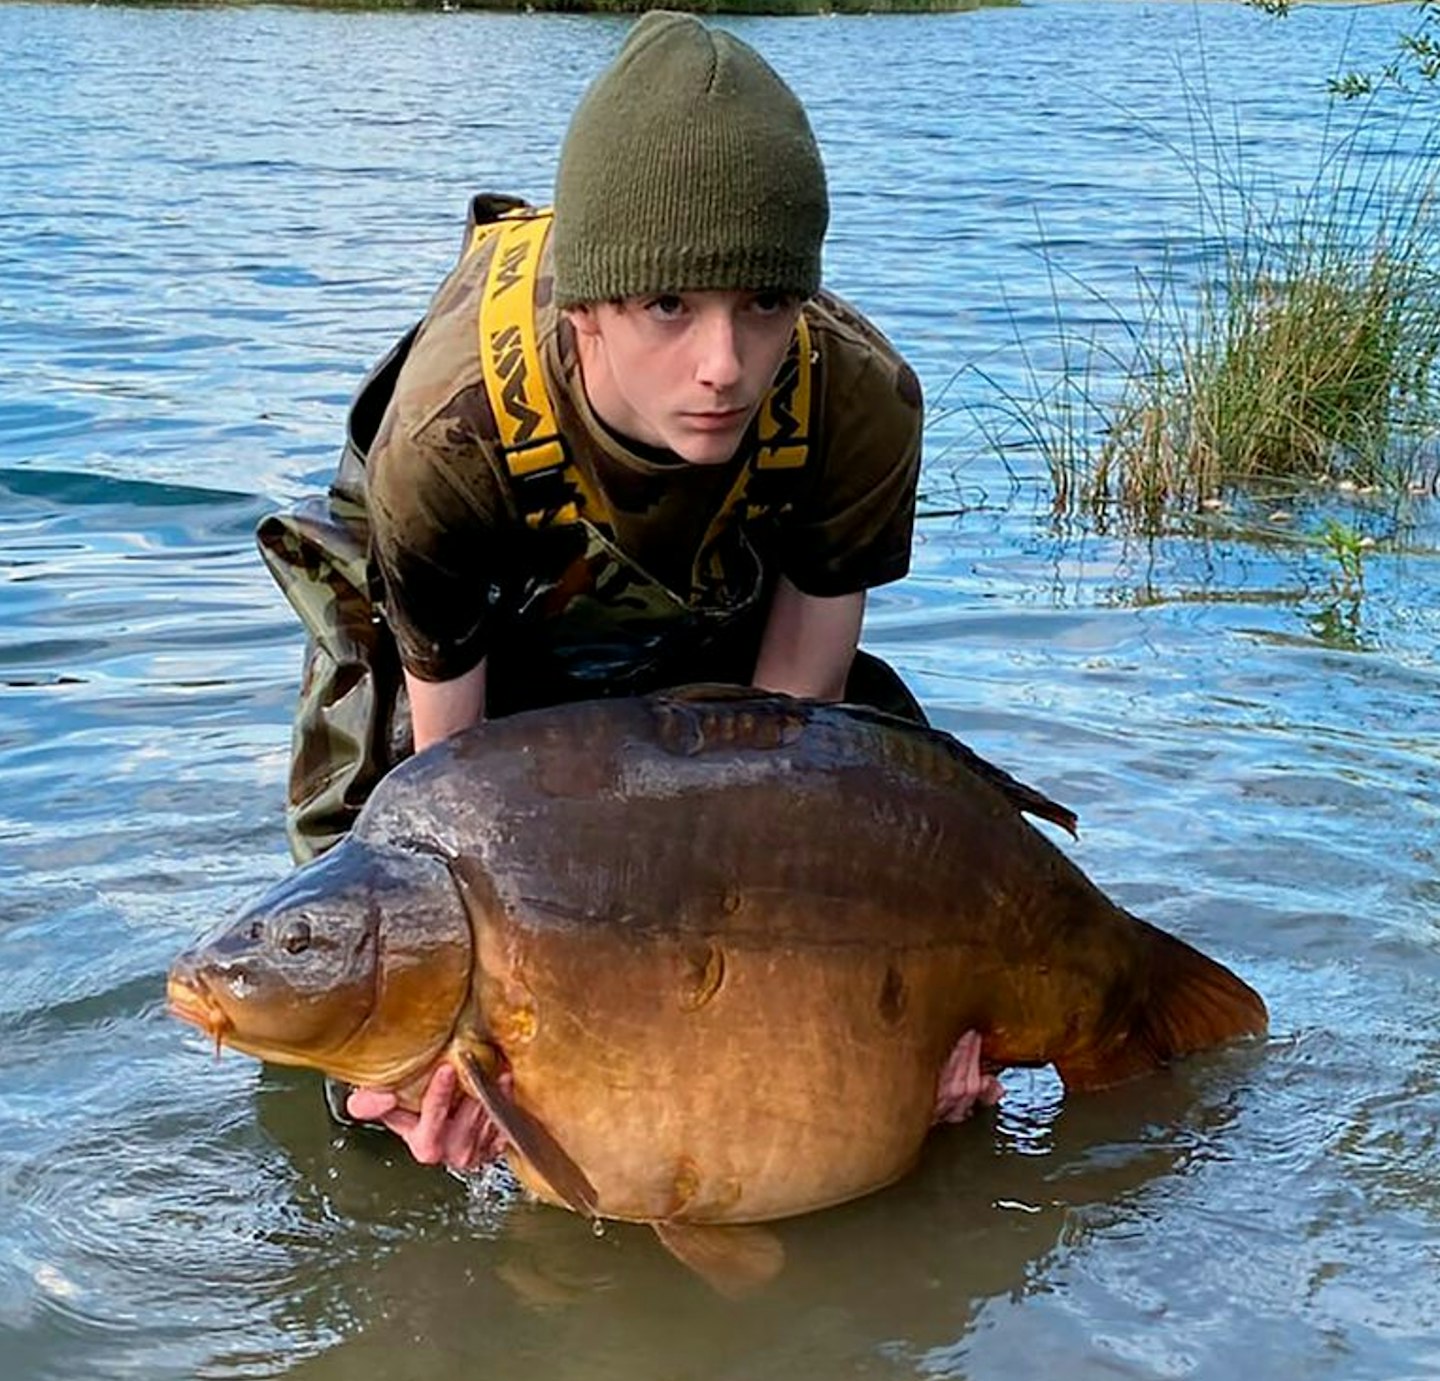 14-year-old Jensen Price caught the UK’s biggest carp